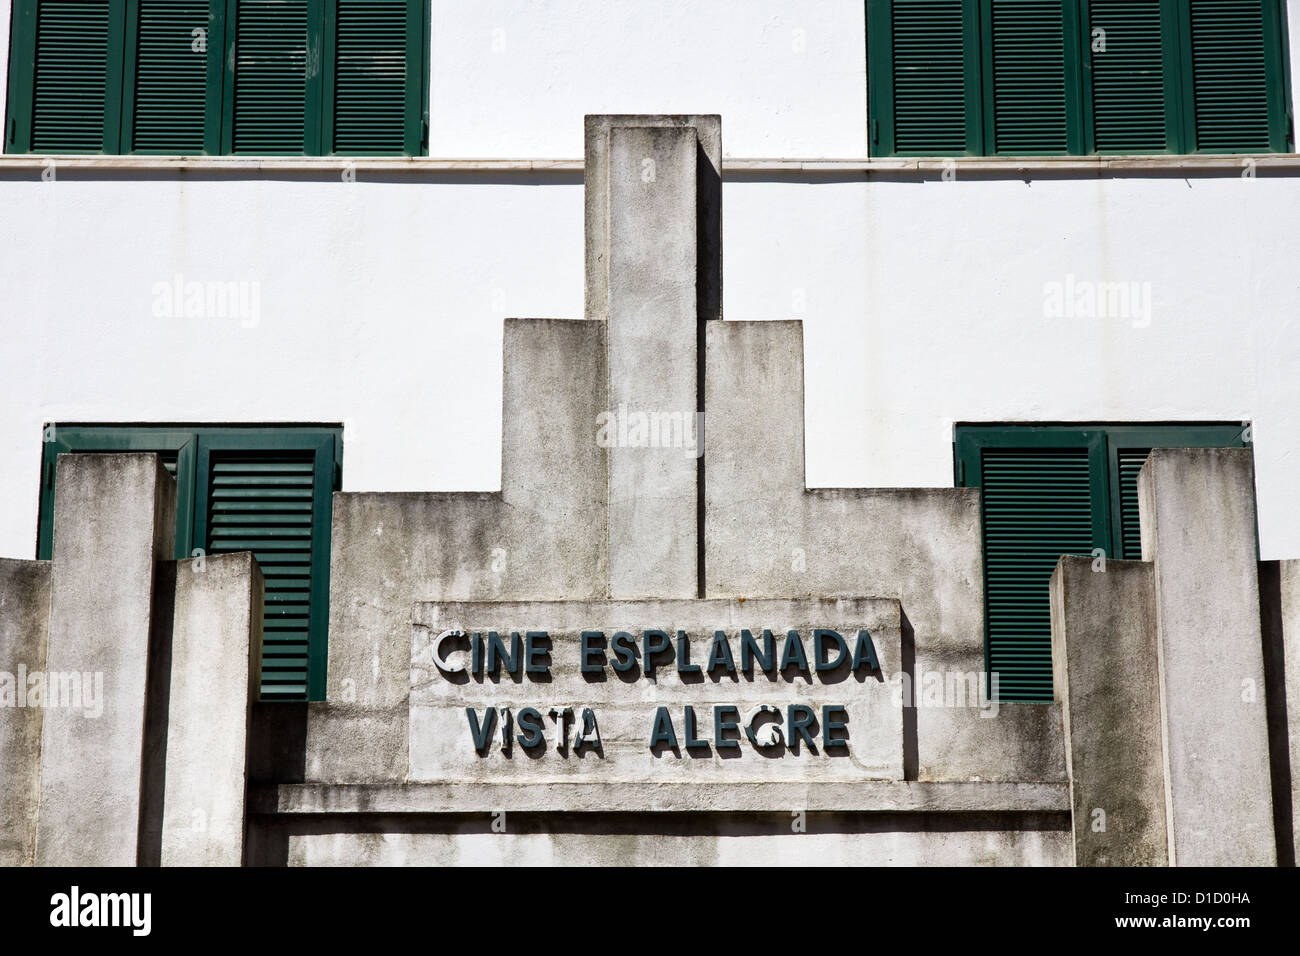 Cine Esplanada Vista Alegre, Beja, Baixo Alentejo region, Portugal. Stock Photo